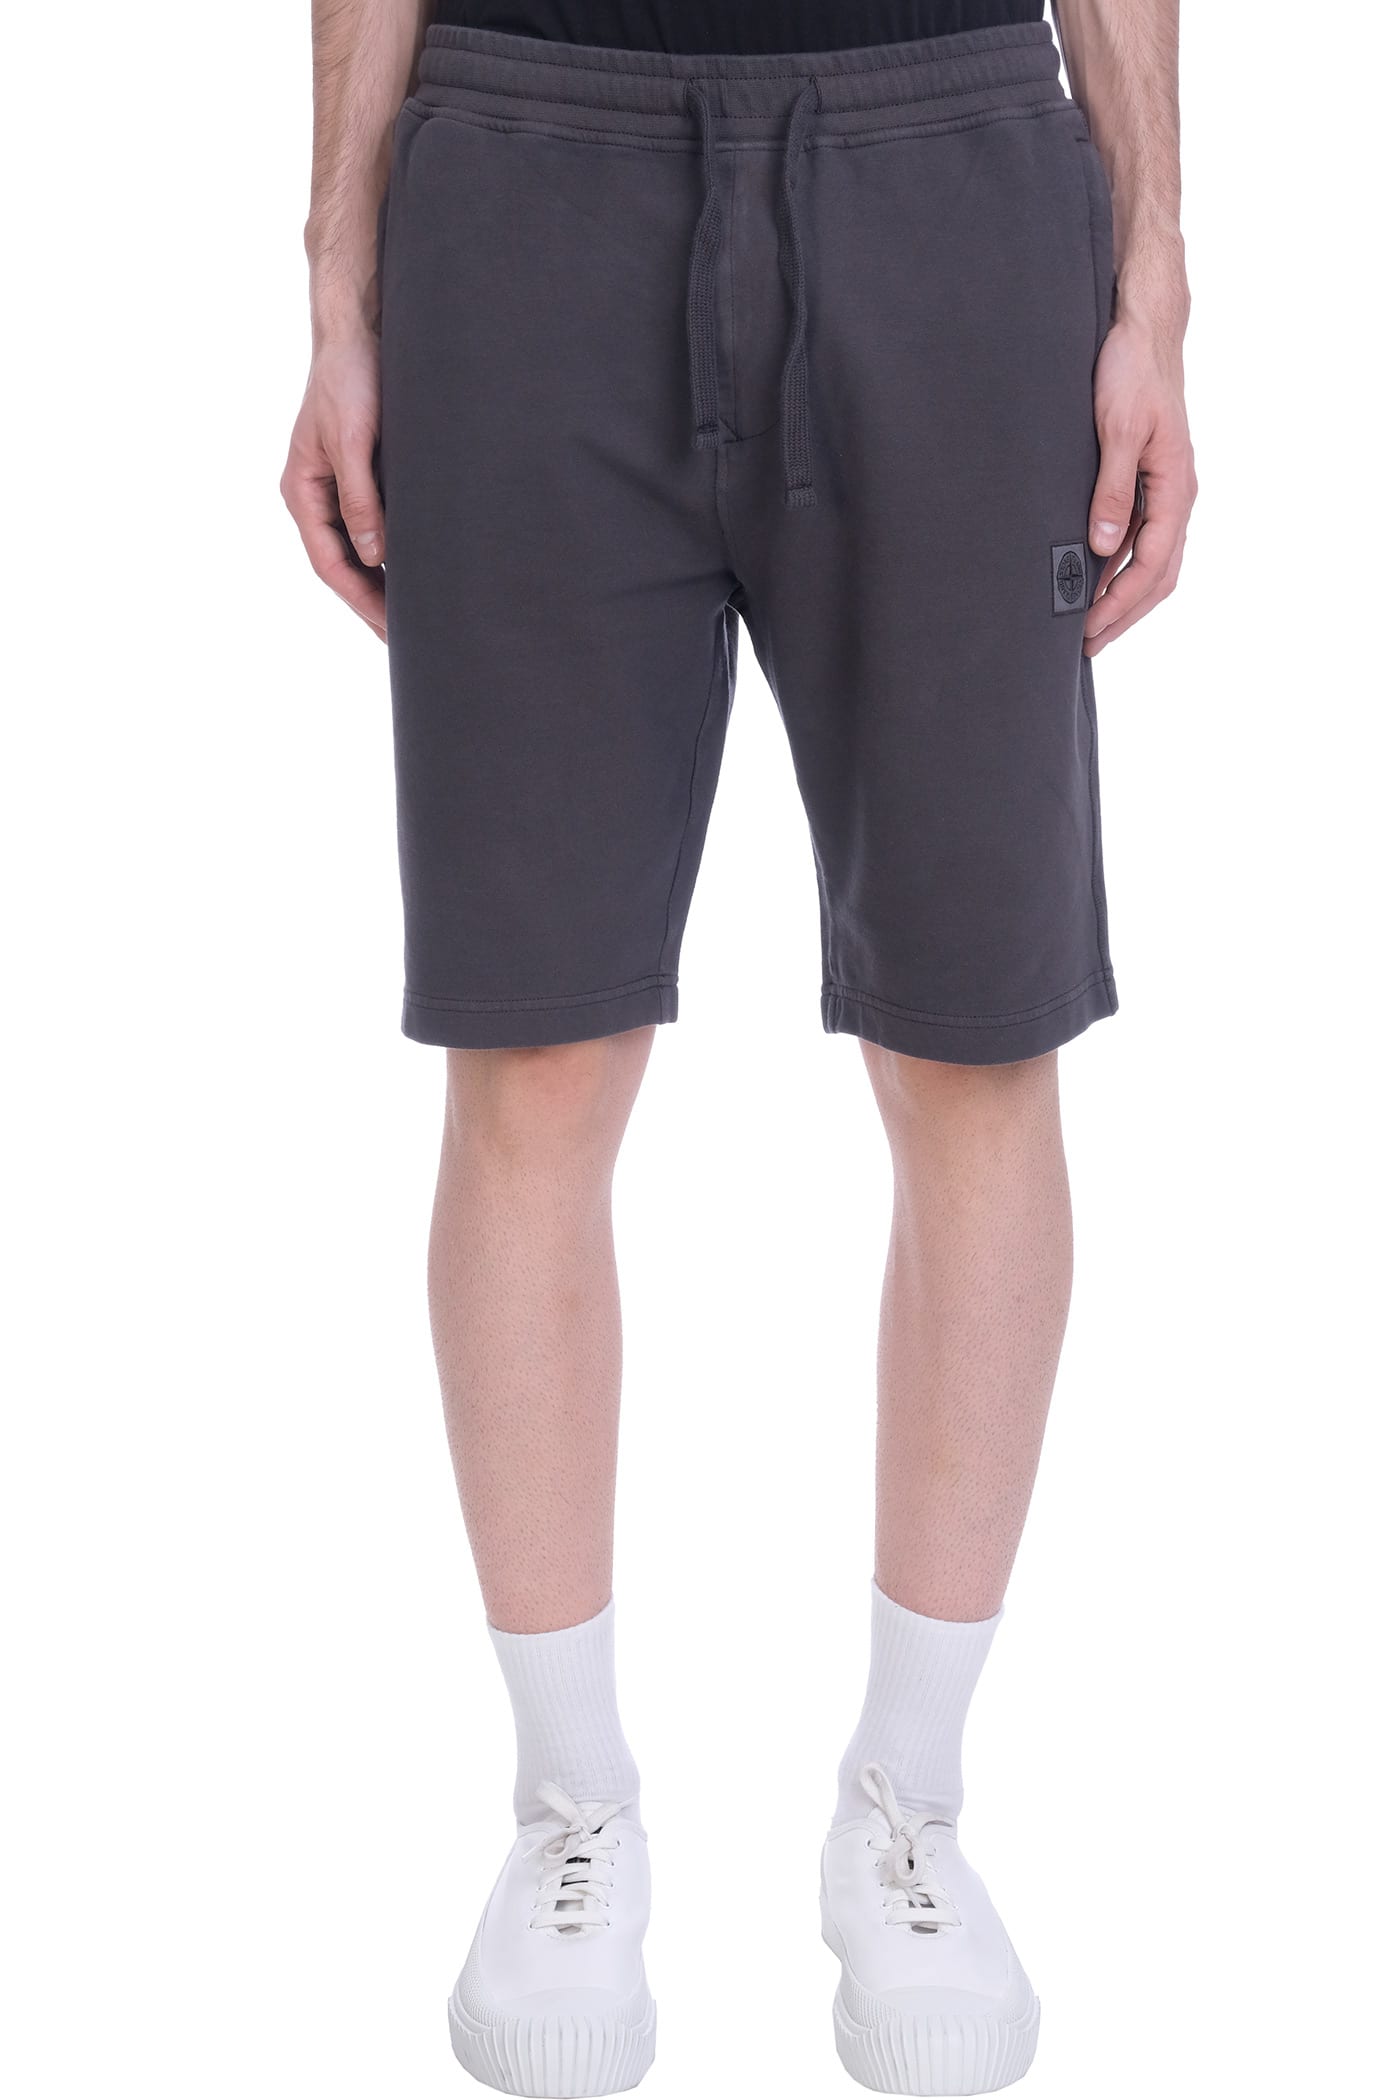 Stone Island Shorts In Grey Cotton